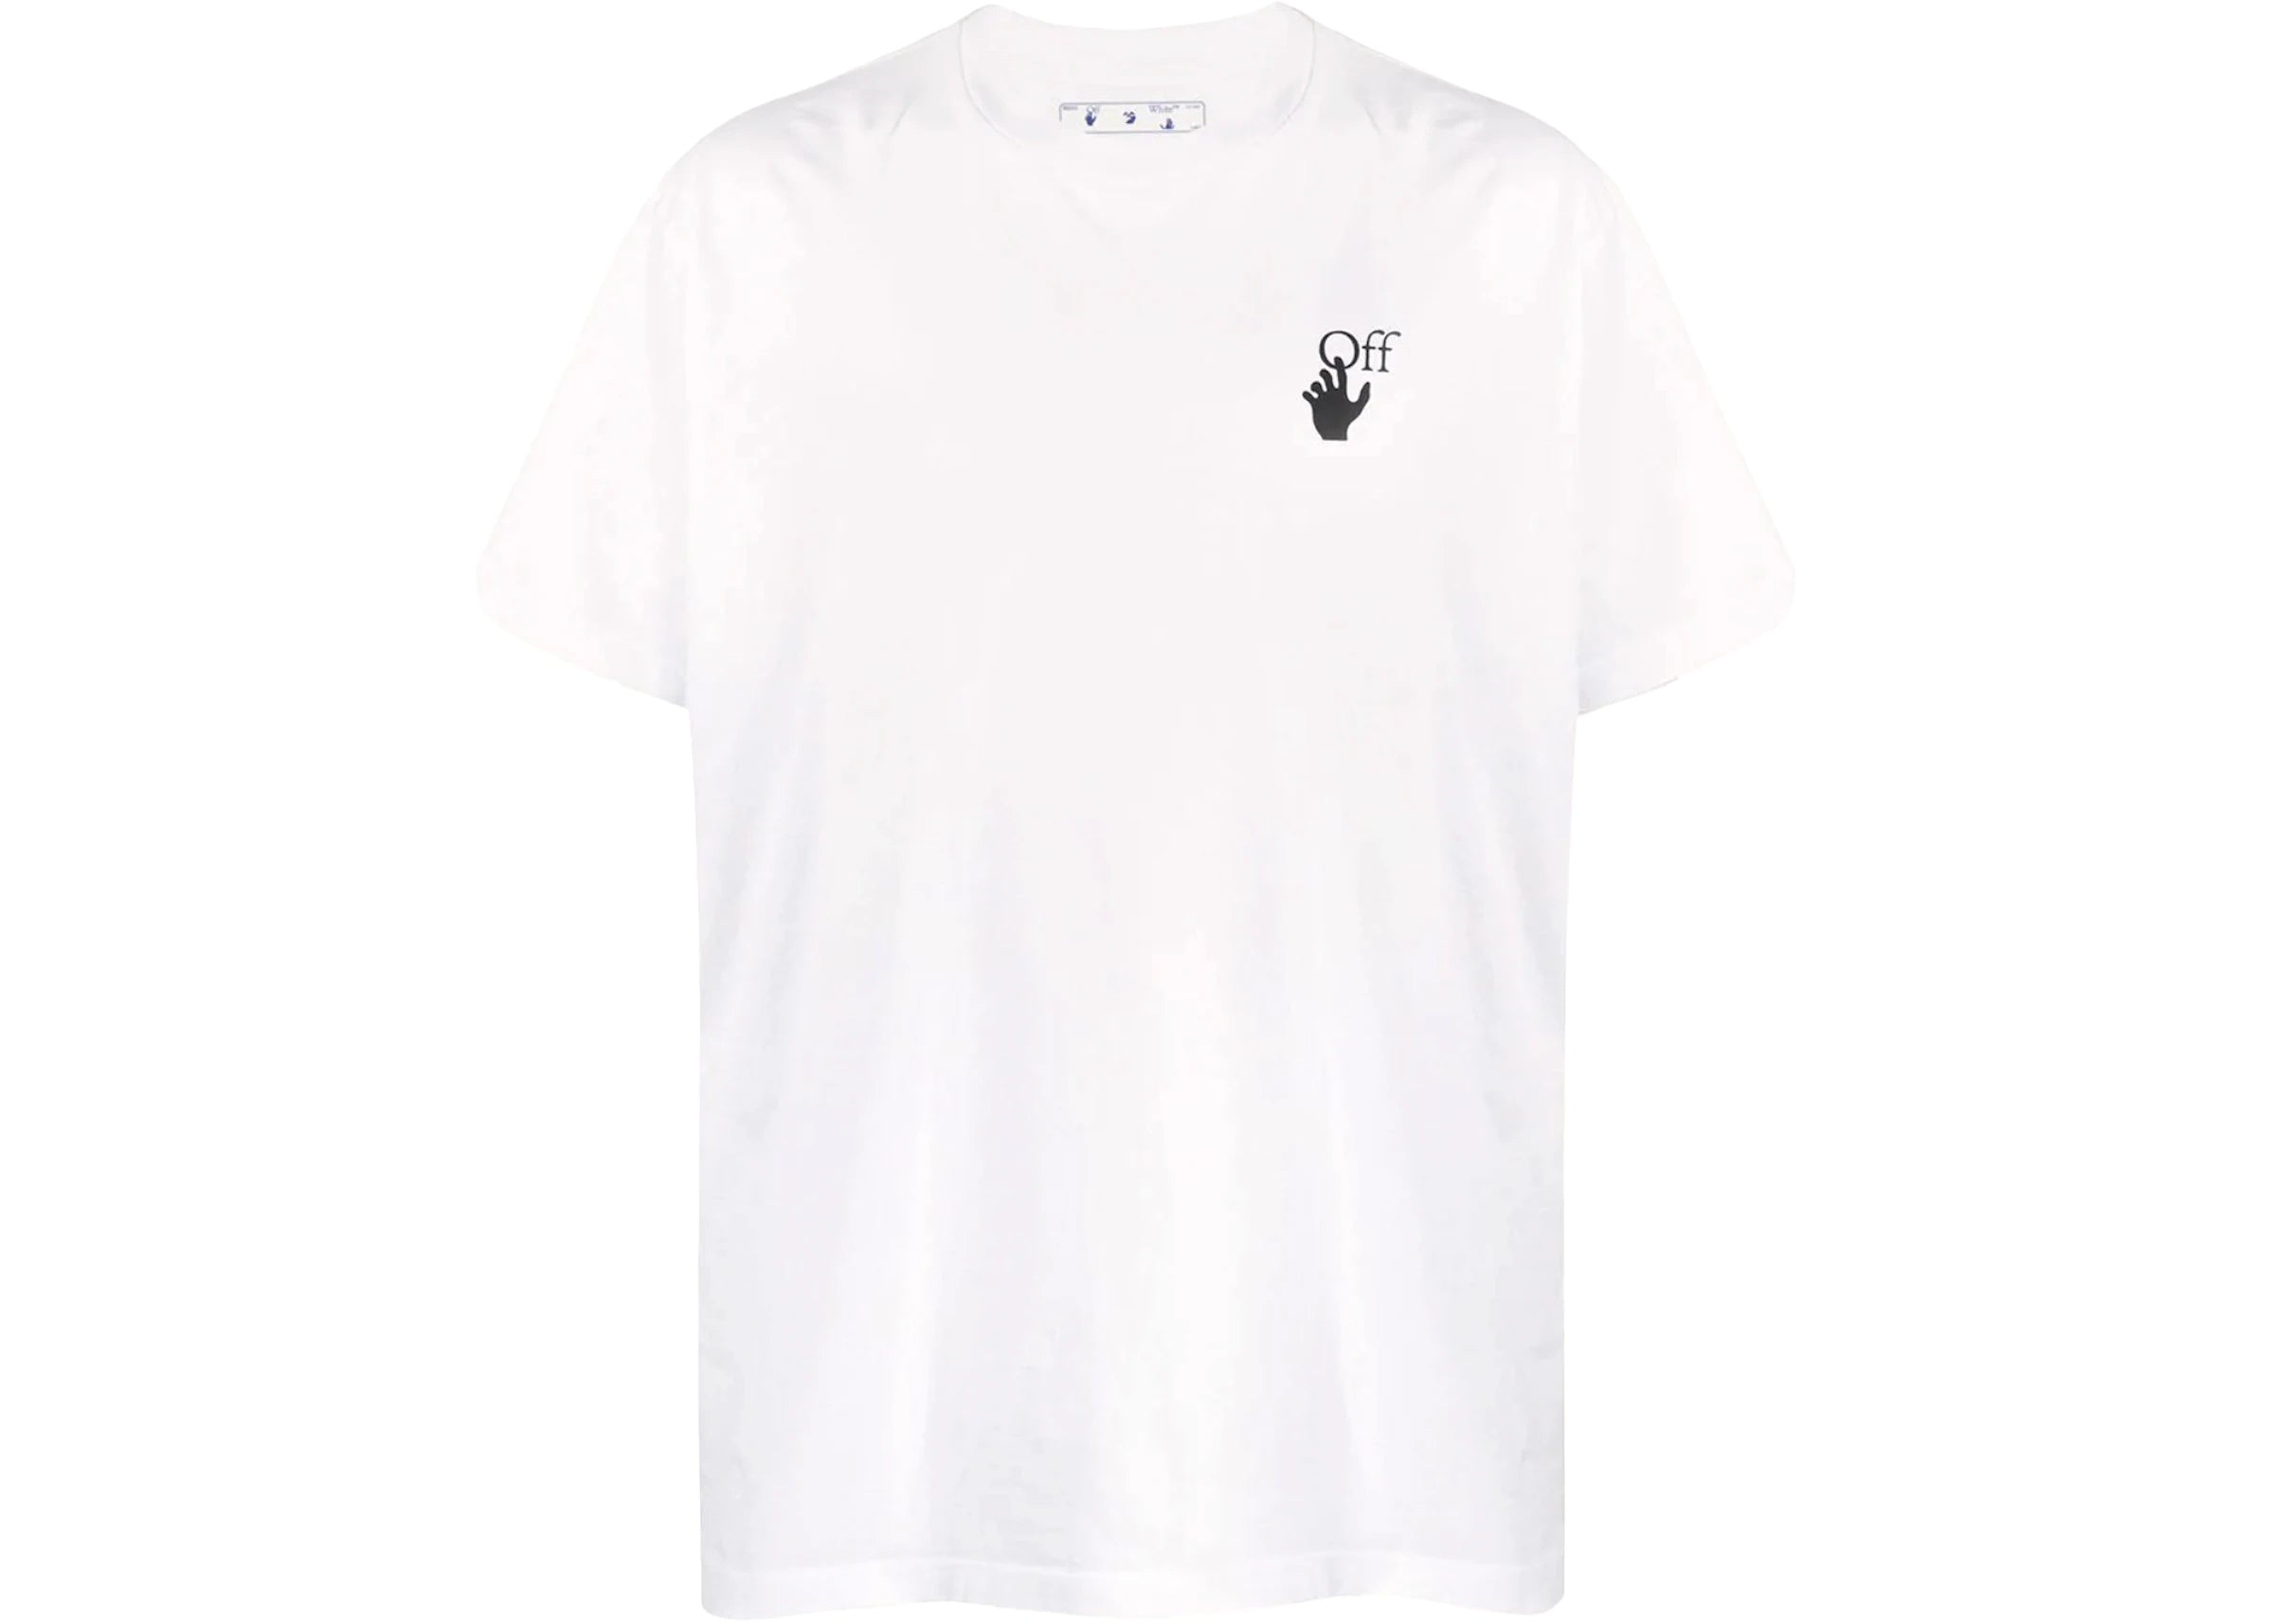 Off-White Pascal Arrow camiseta de manga corta blanca (ajuste extragrande)